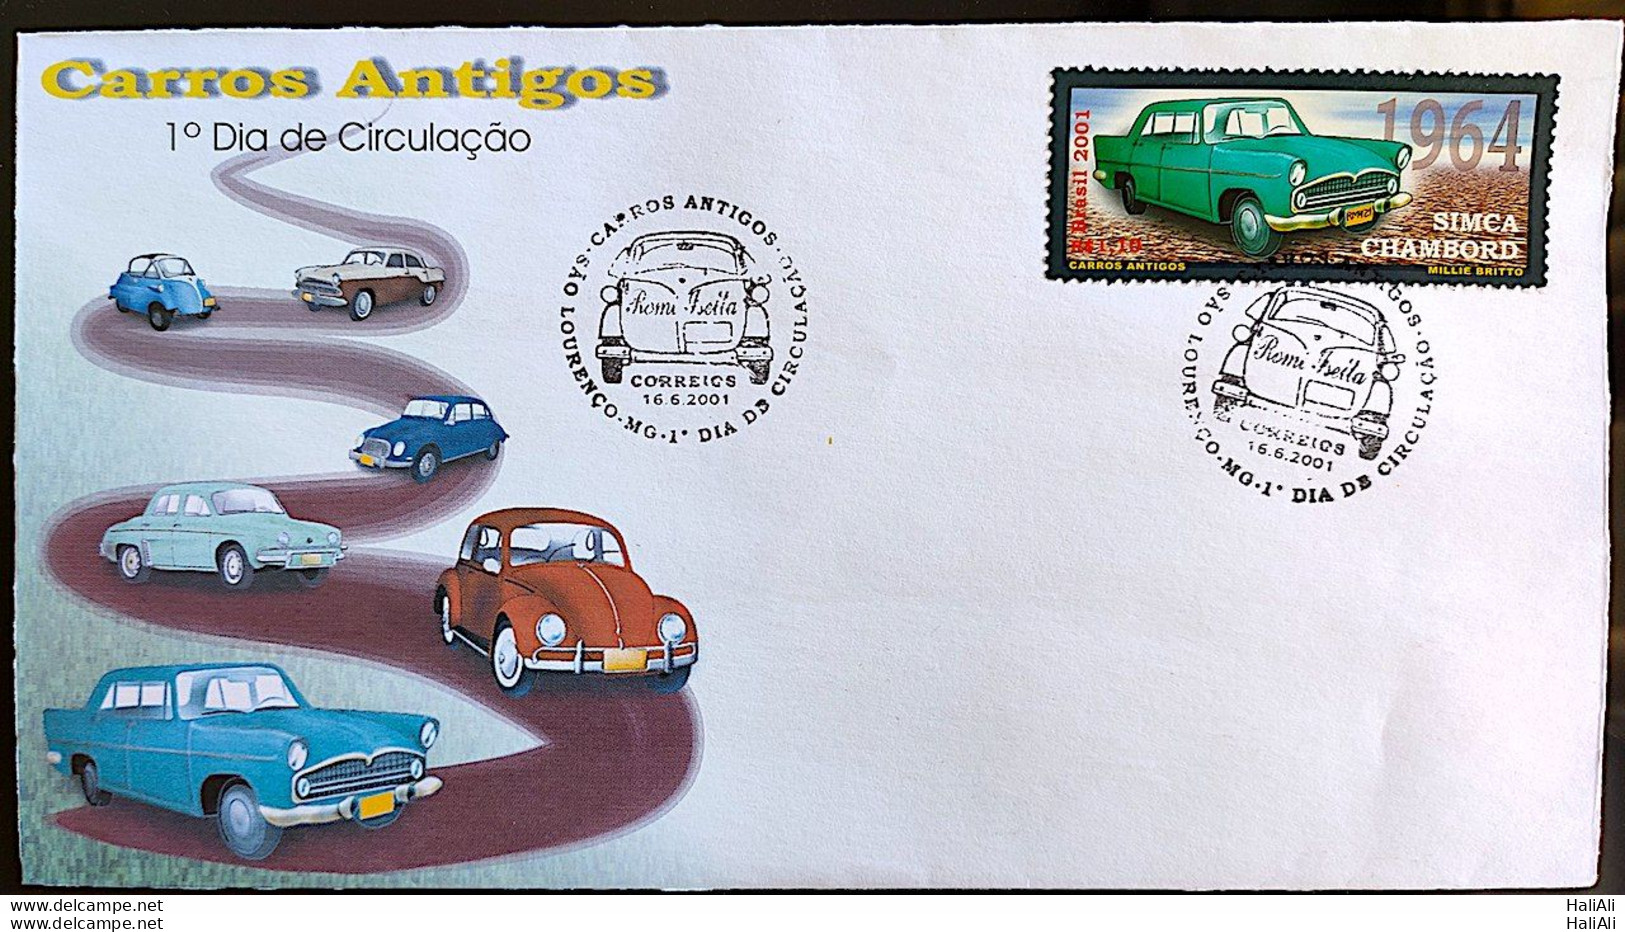 Brazil Envelope FDC 705 Vintage Cars Romi Iseta DKW Gordini Beetle Simca Chambord Aero Willys 2001